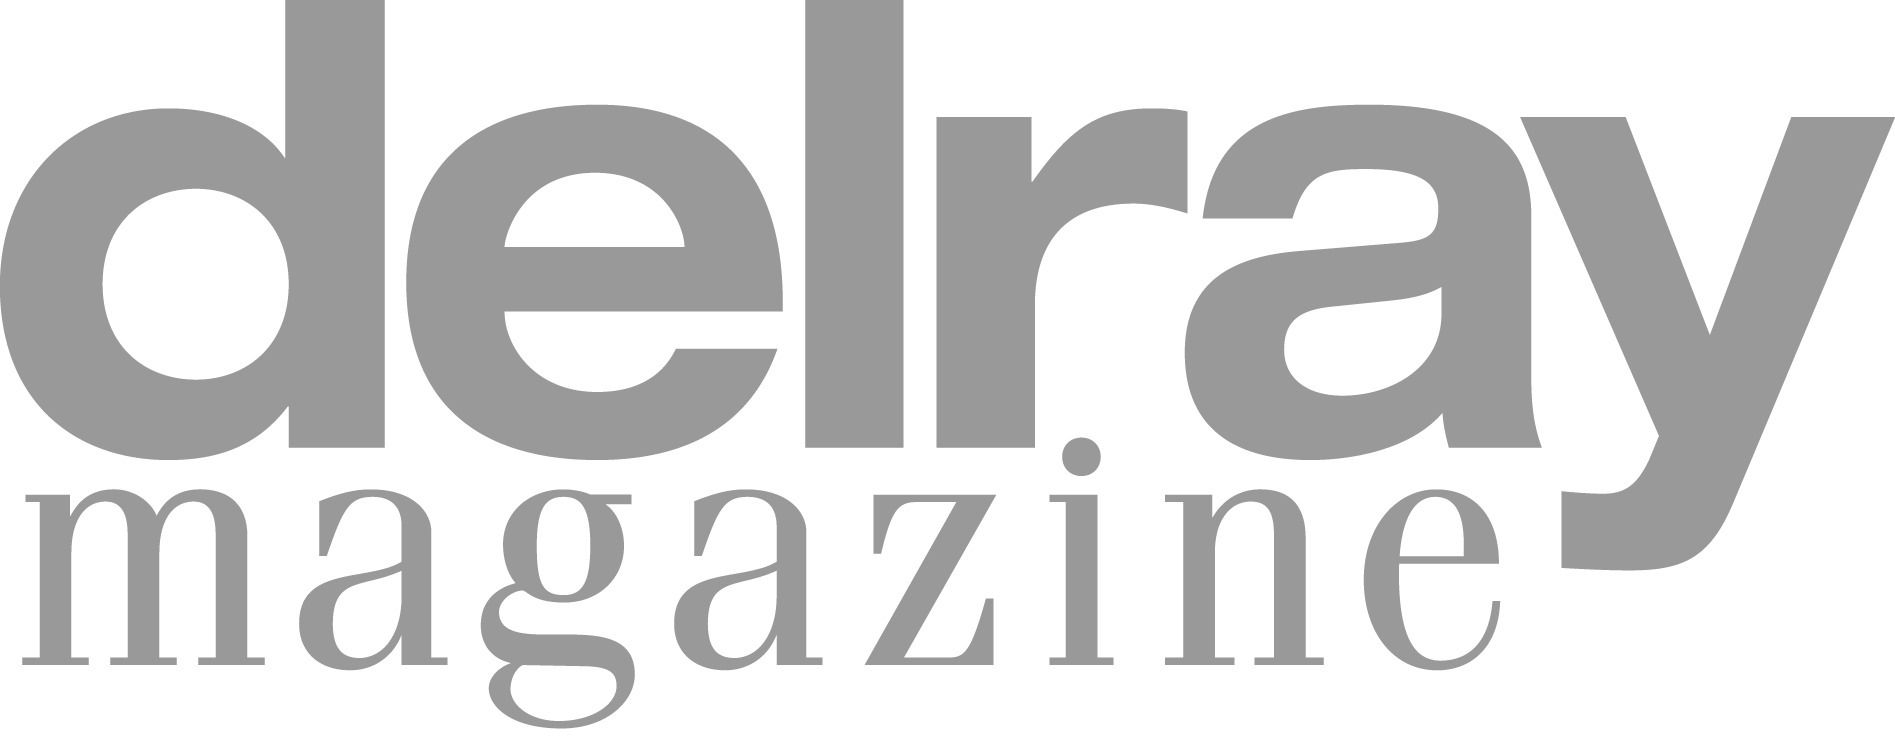 Dealray Logo - Delray Magazine - Boca Magazine